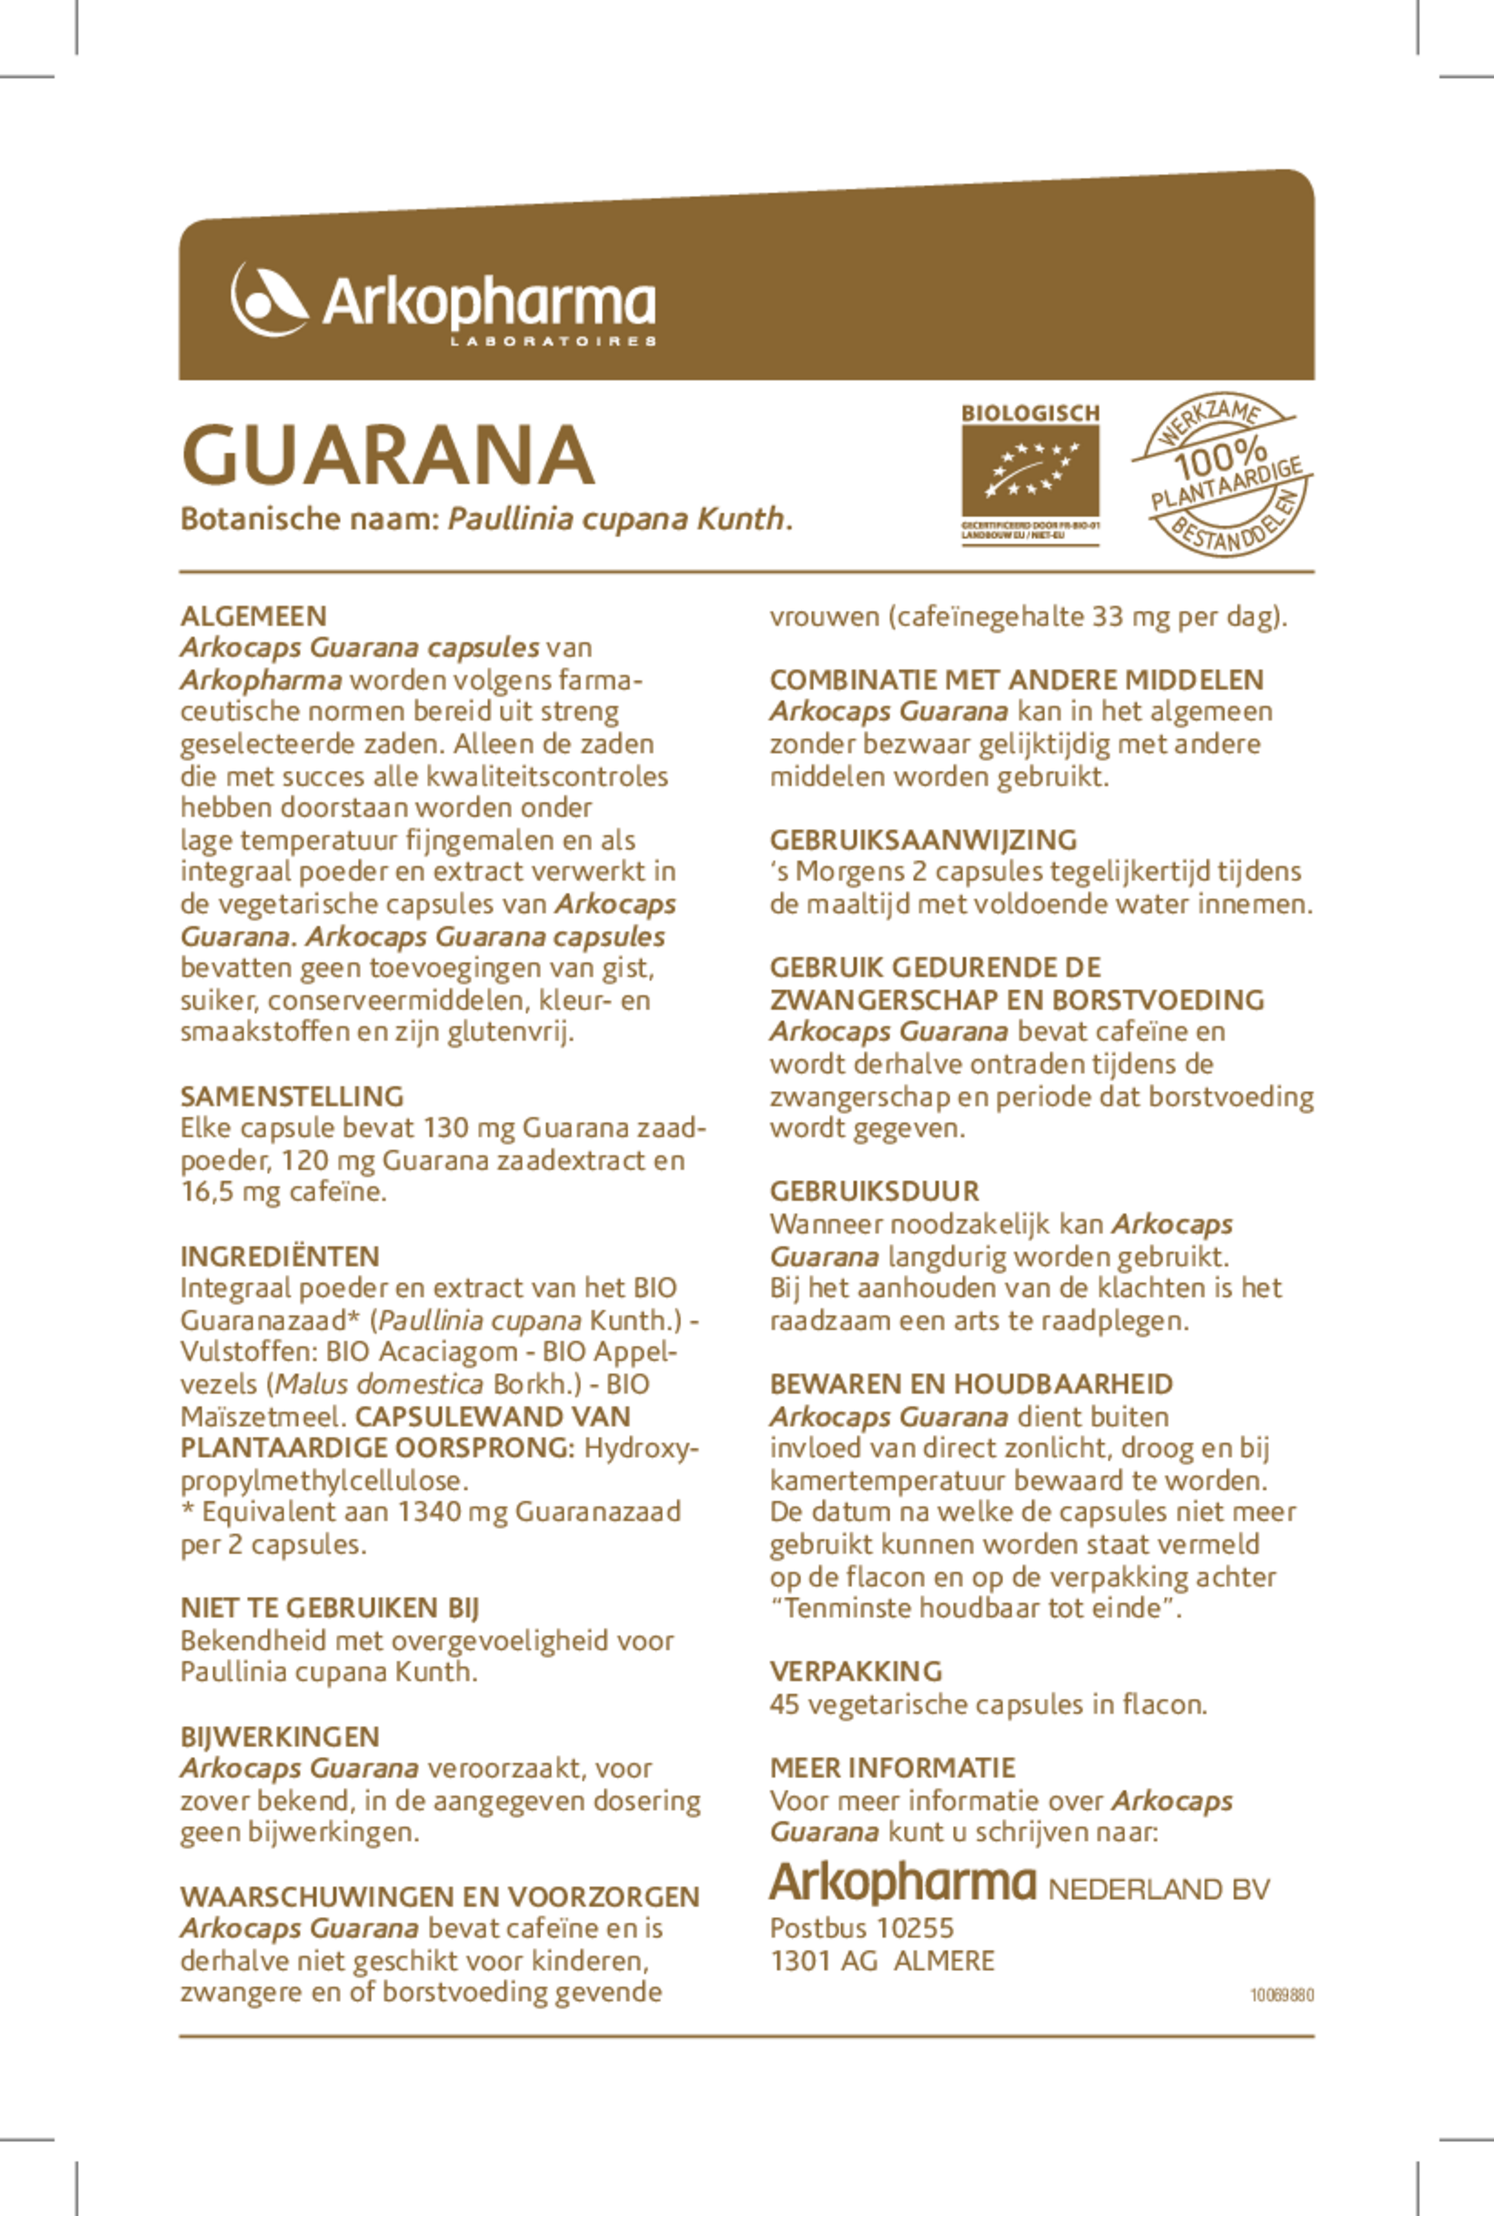 Guarana Capsules afbeelding van document #1, gebruiksaanwijzing